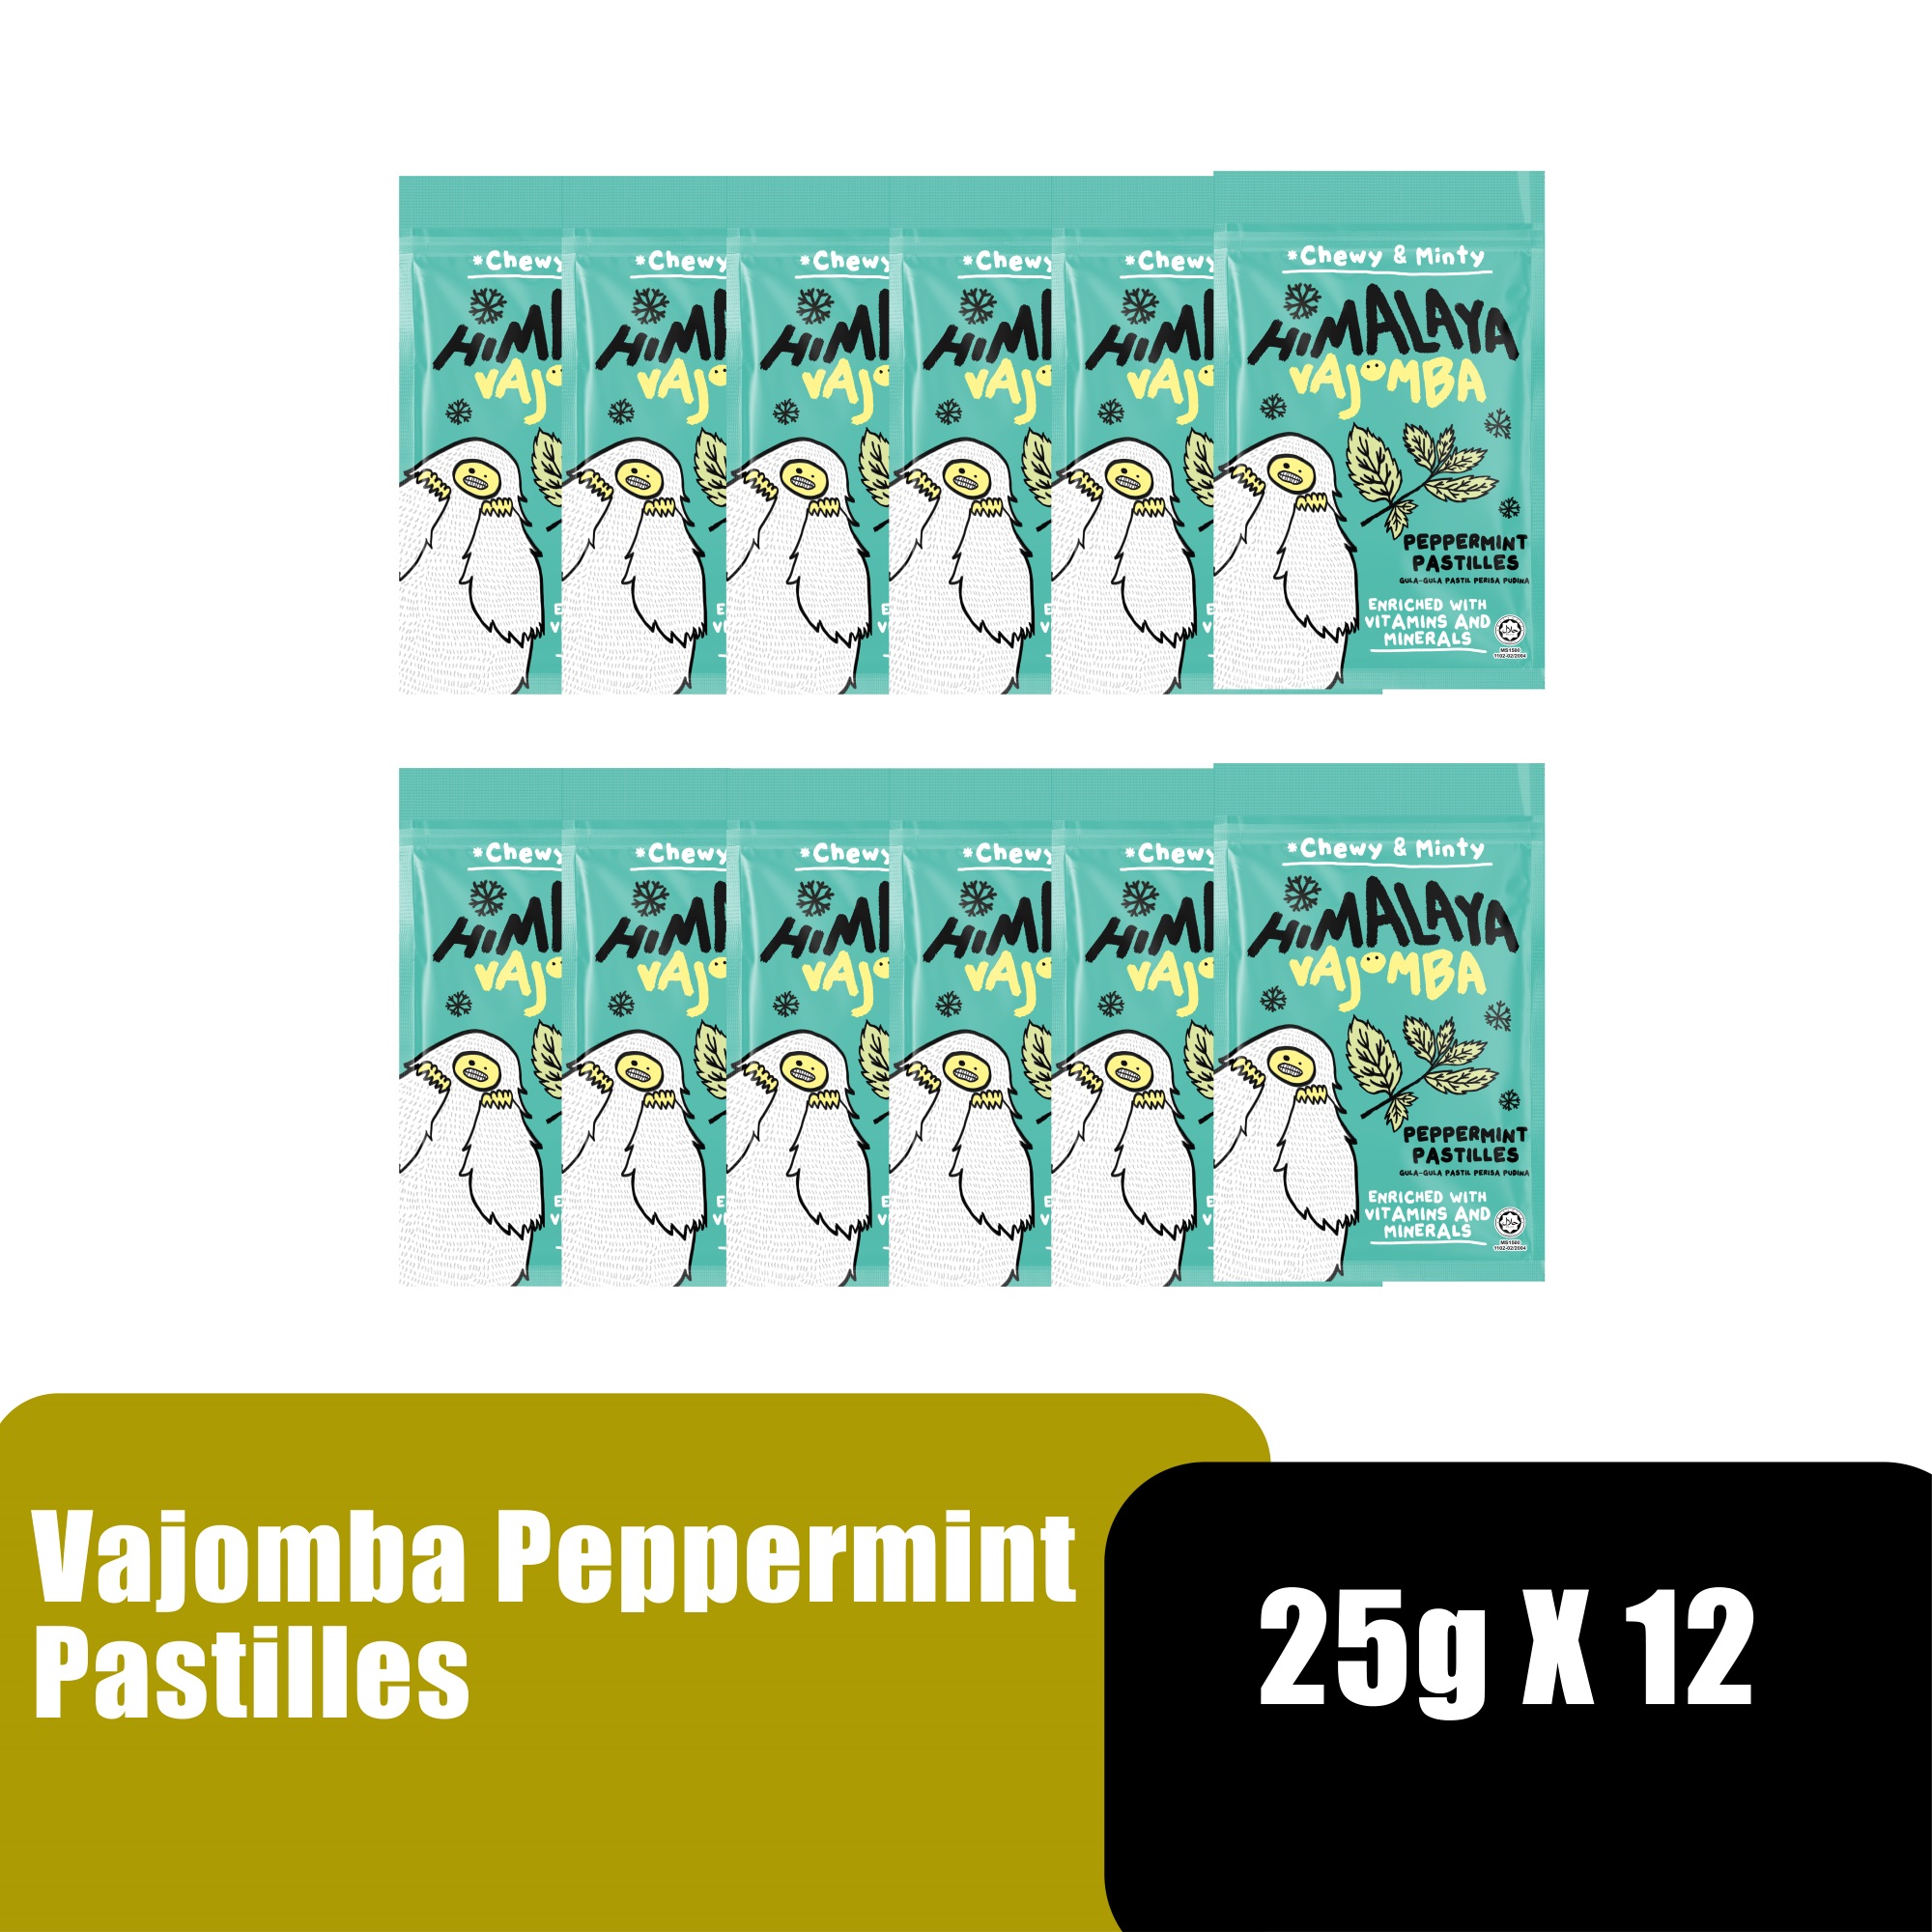 HIMALAYA VAJOMBA PASTILLES 25G X 12 - PEPPERMINT